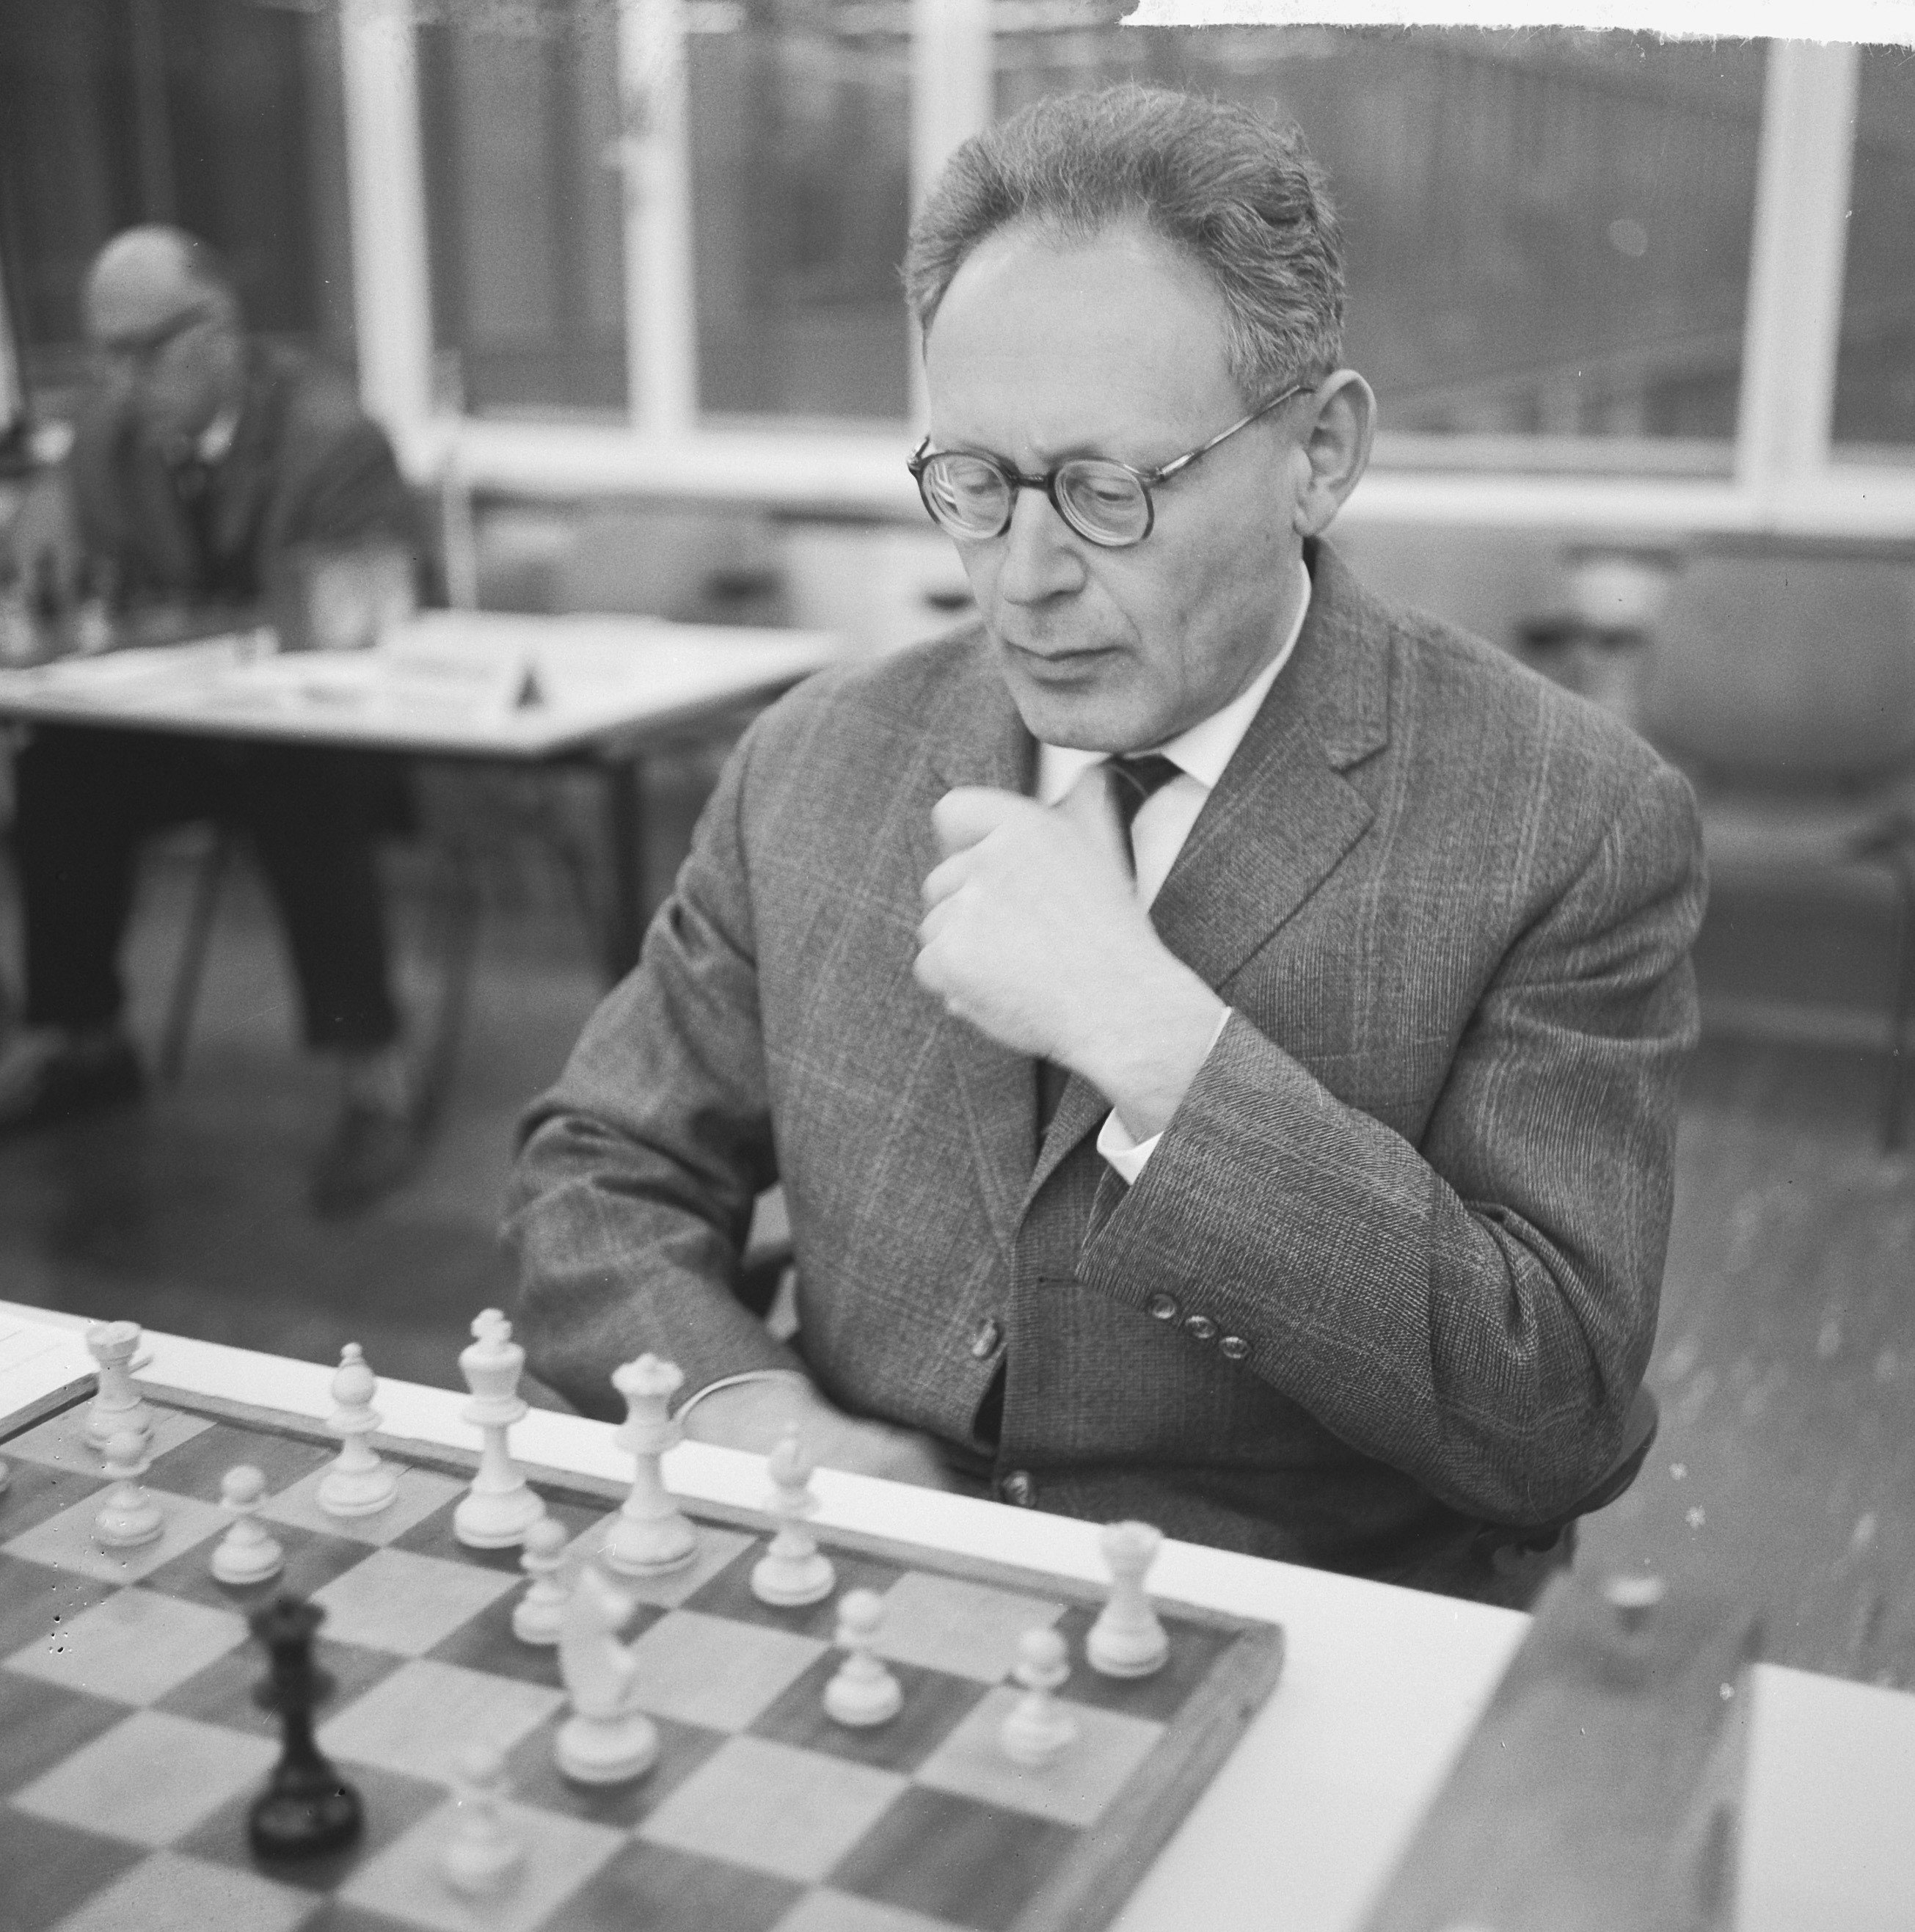 Botvinnik Selected Games - 1926-1946